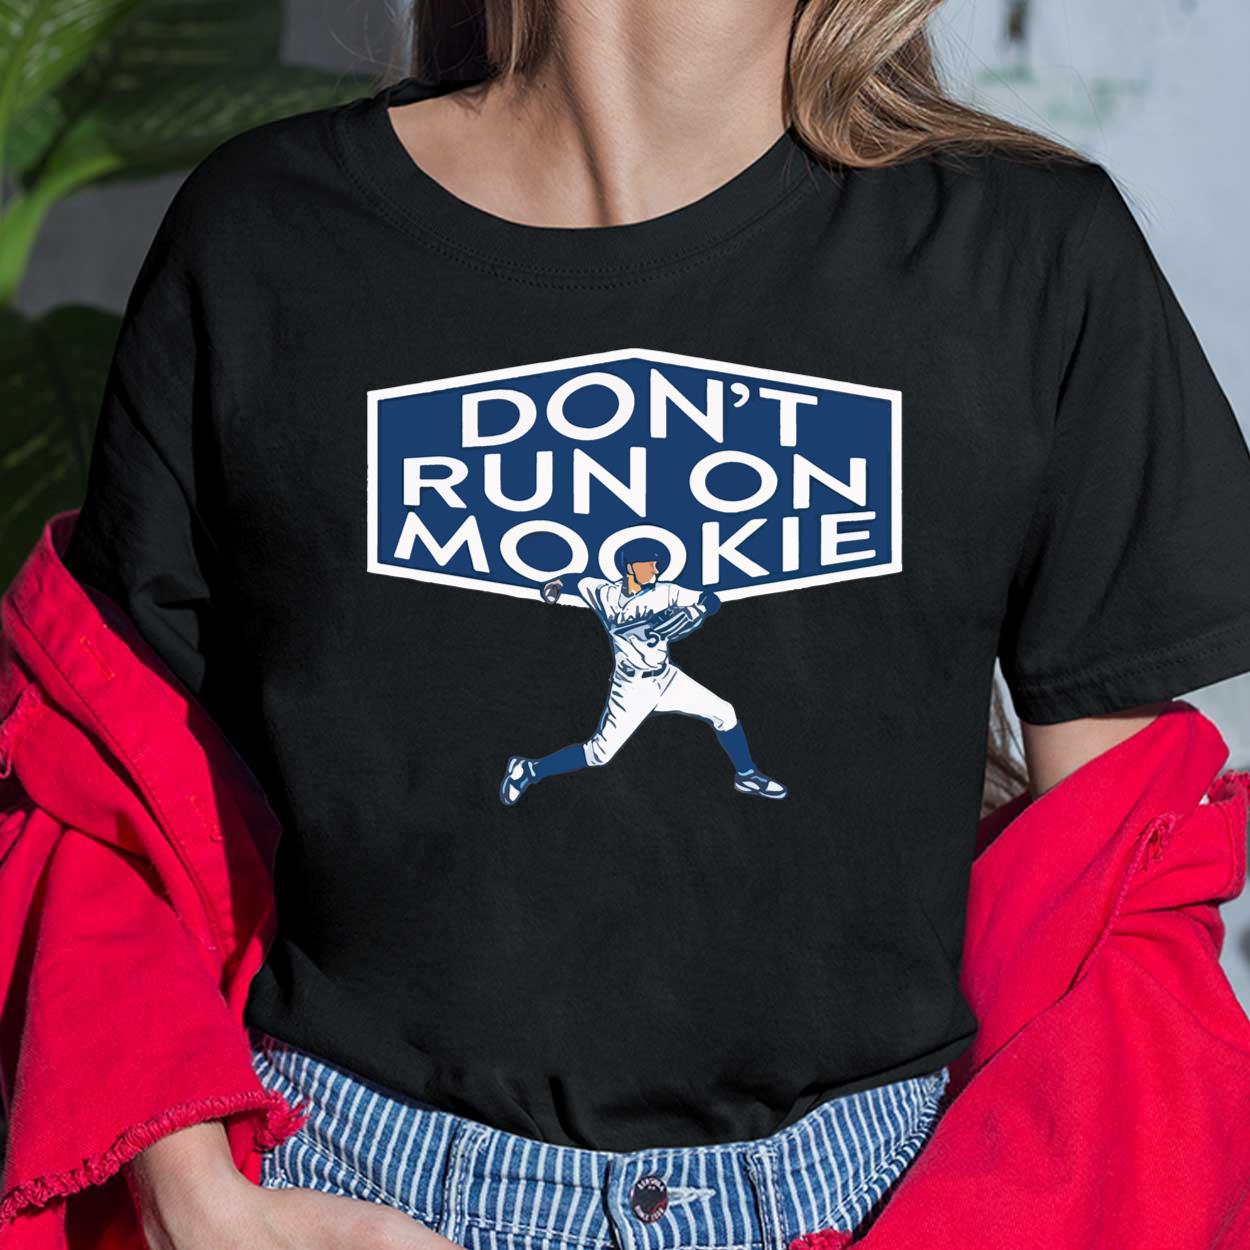 mookie shirt